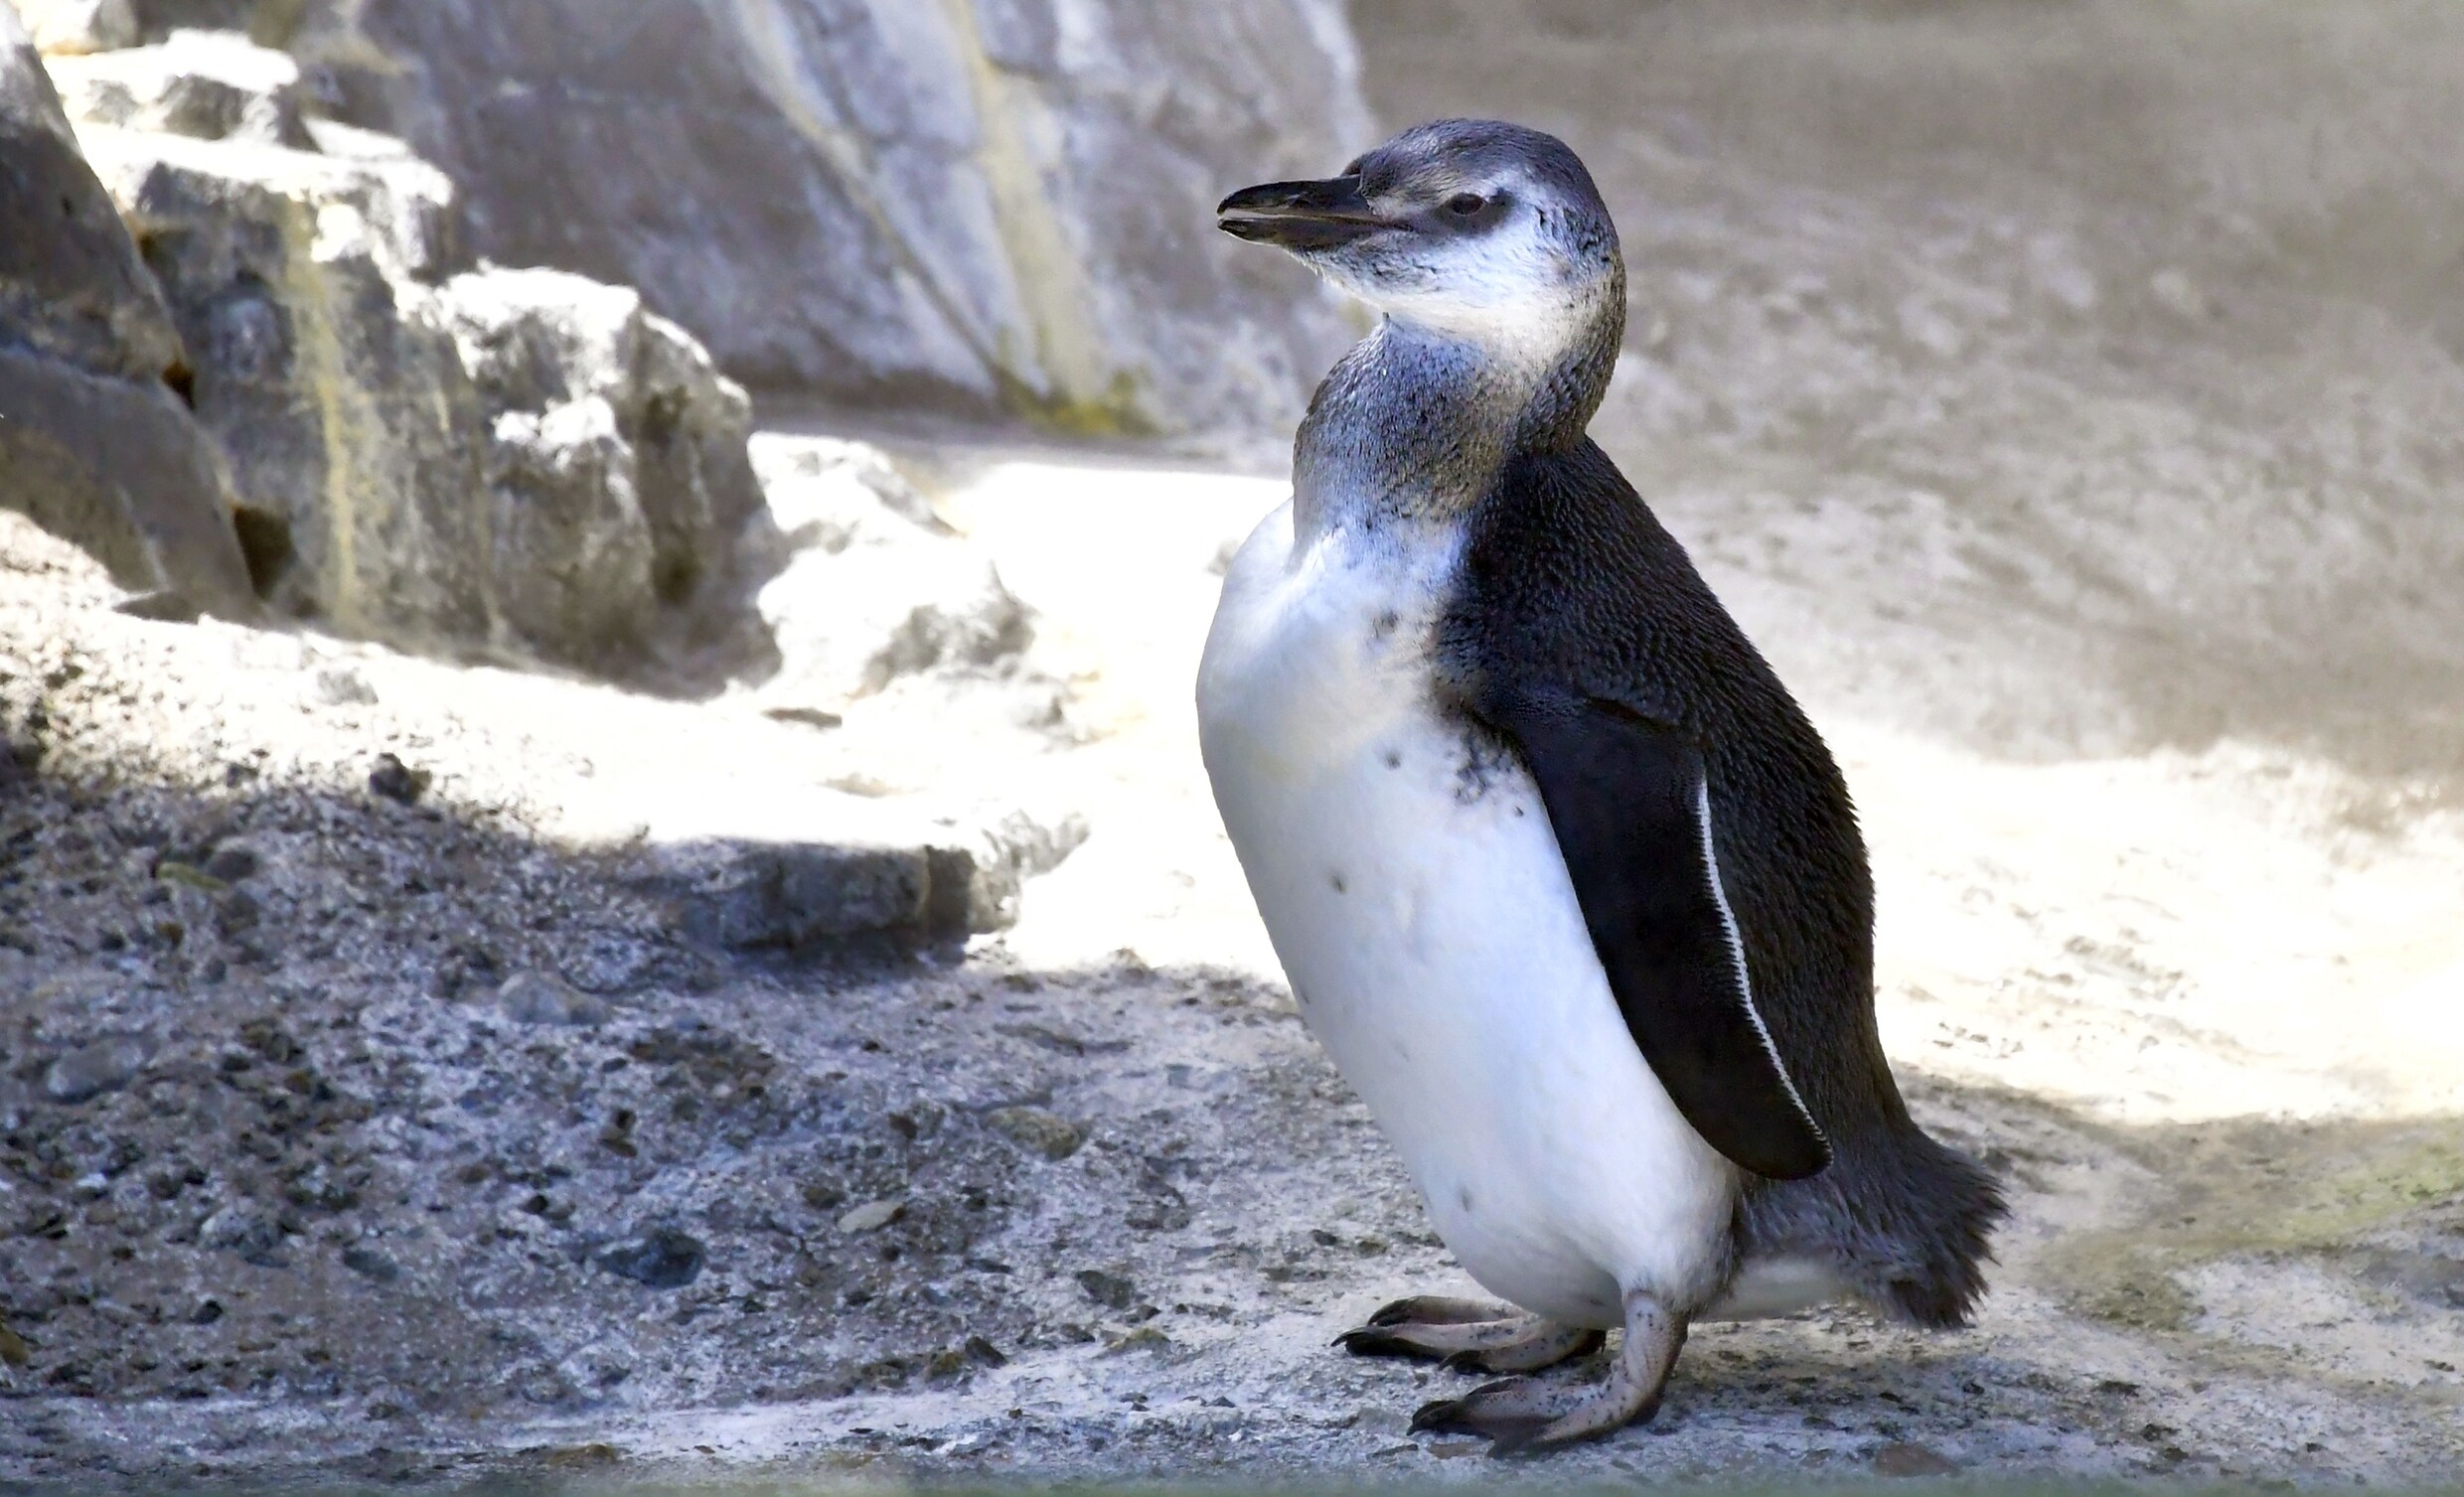 Chileense regering weigert mijnbouwproject om pinguïns te beschermen